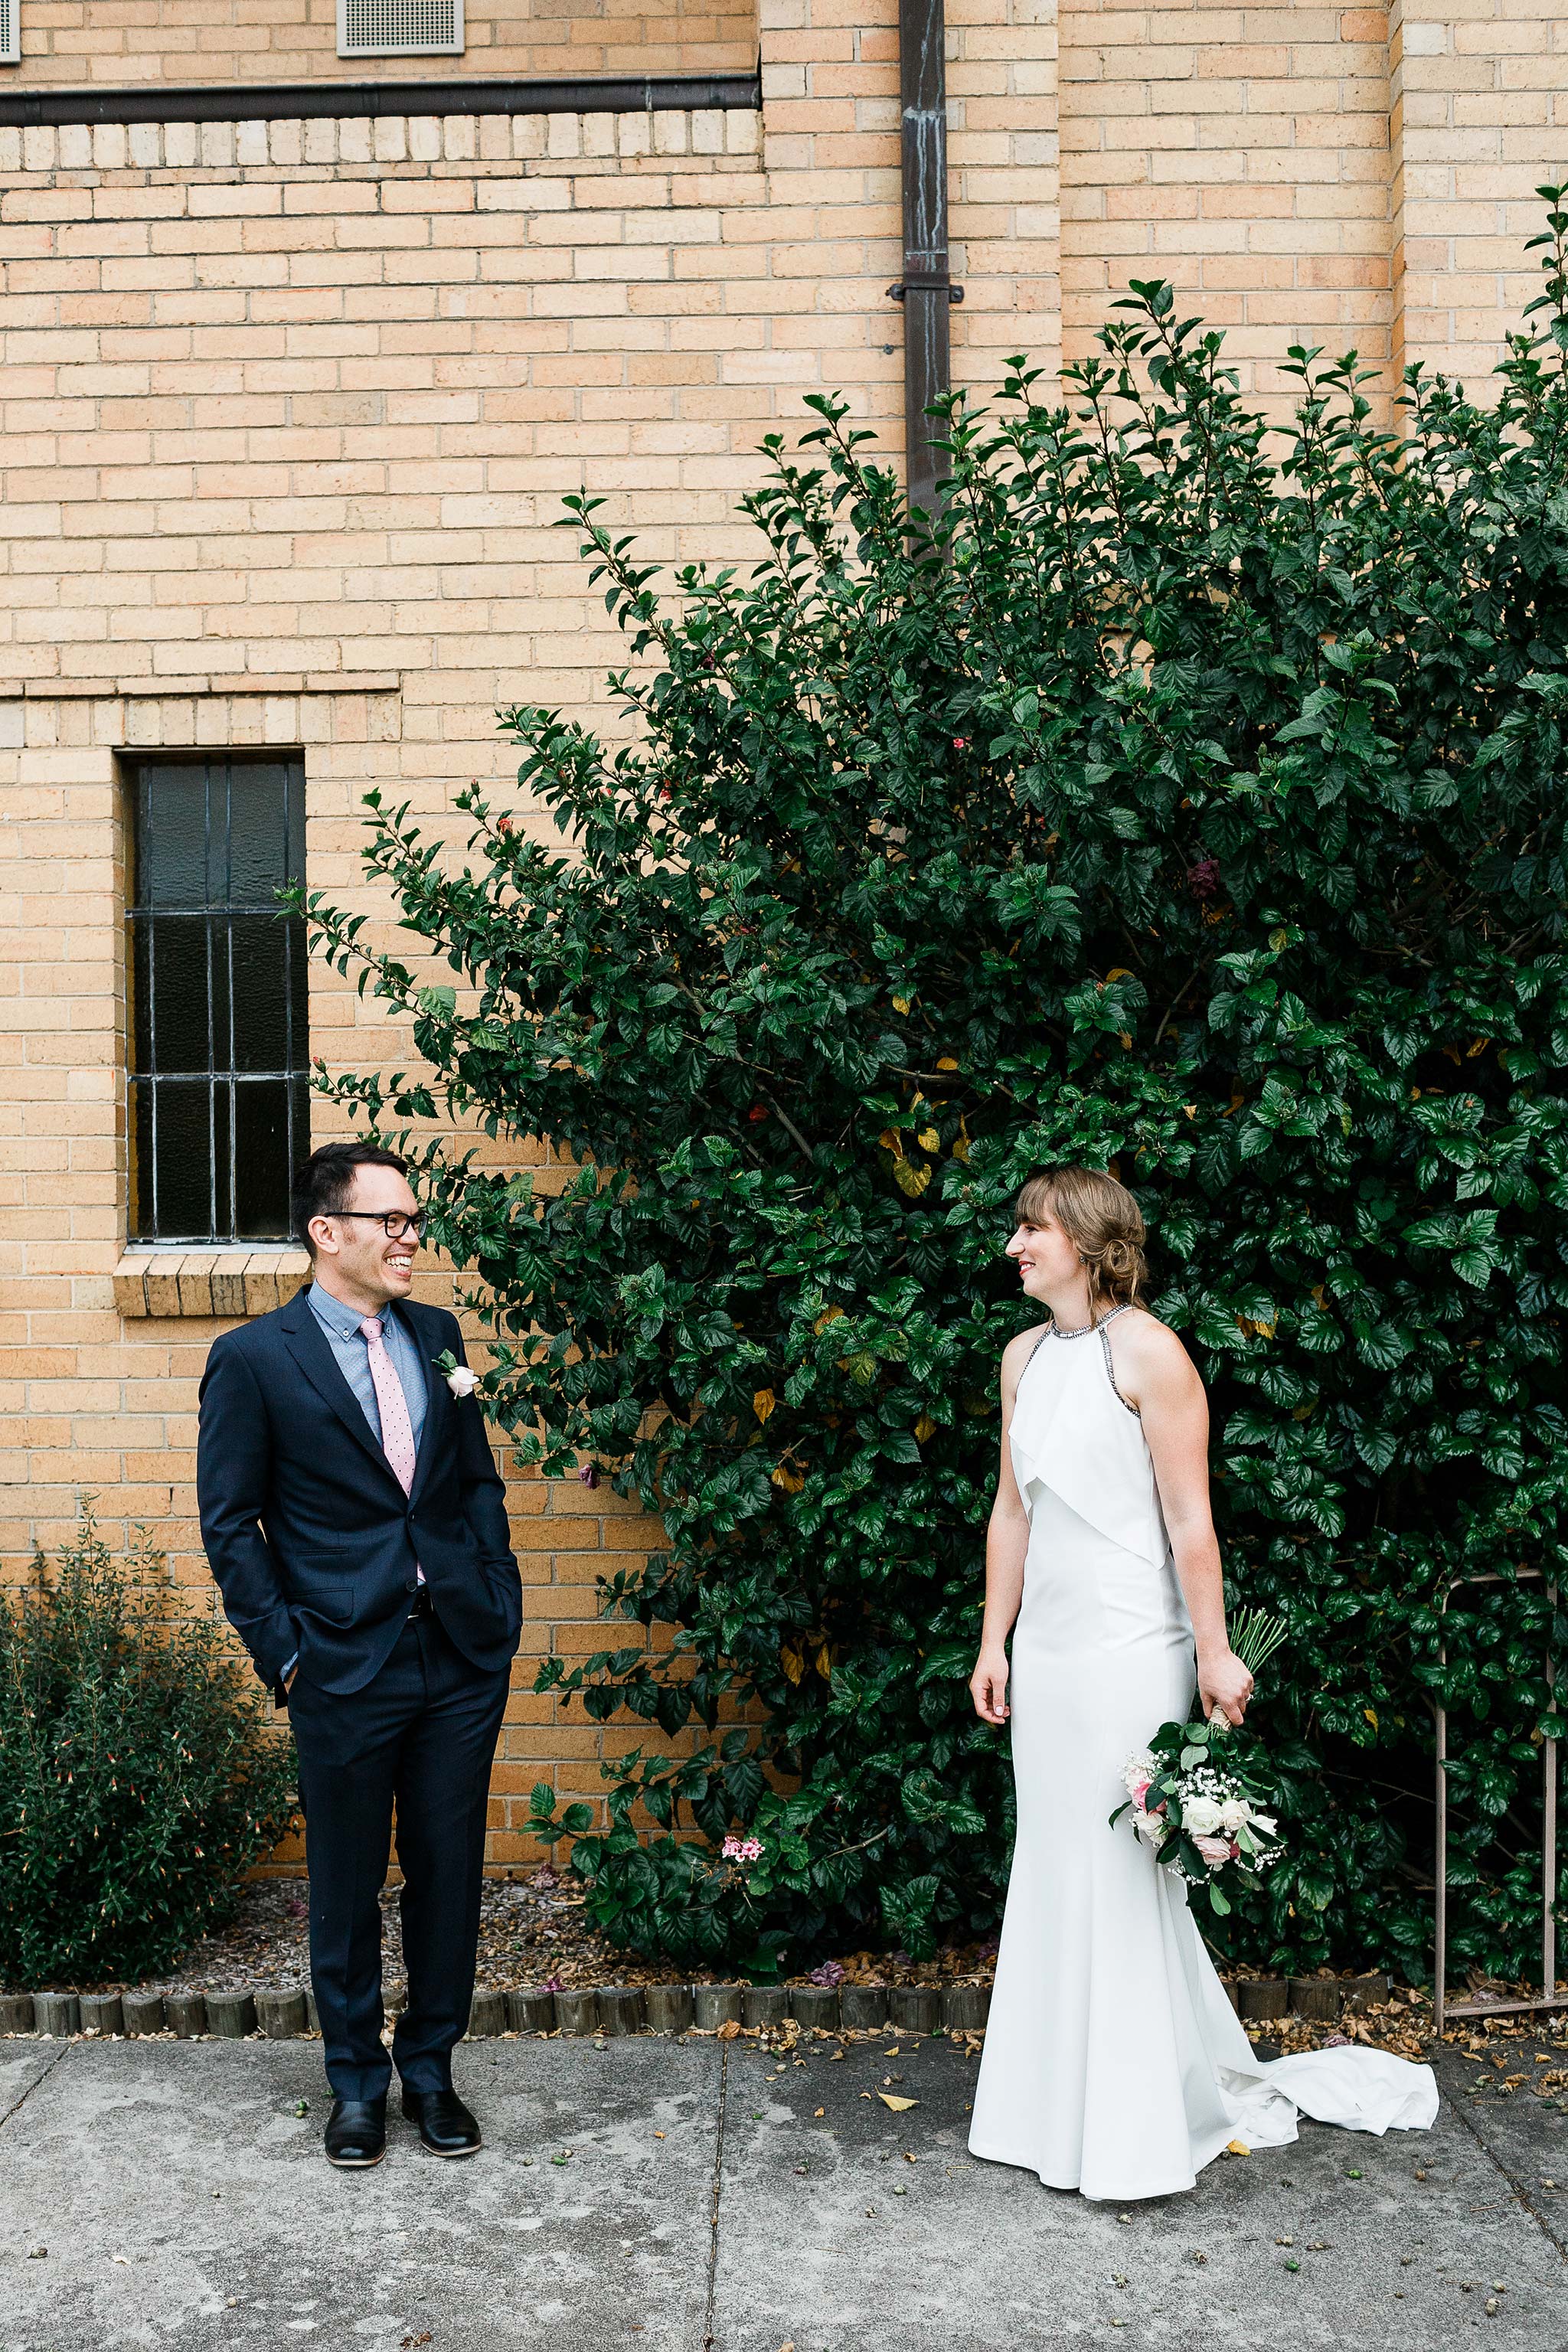 Strathmore-Melbourne-Backyard-Wedding-bride-groom-tree